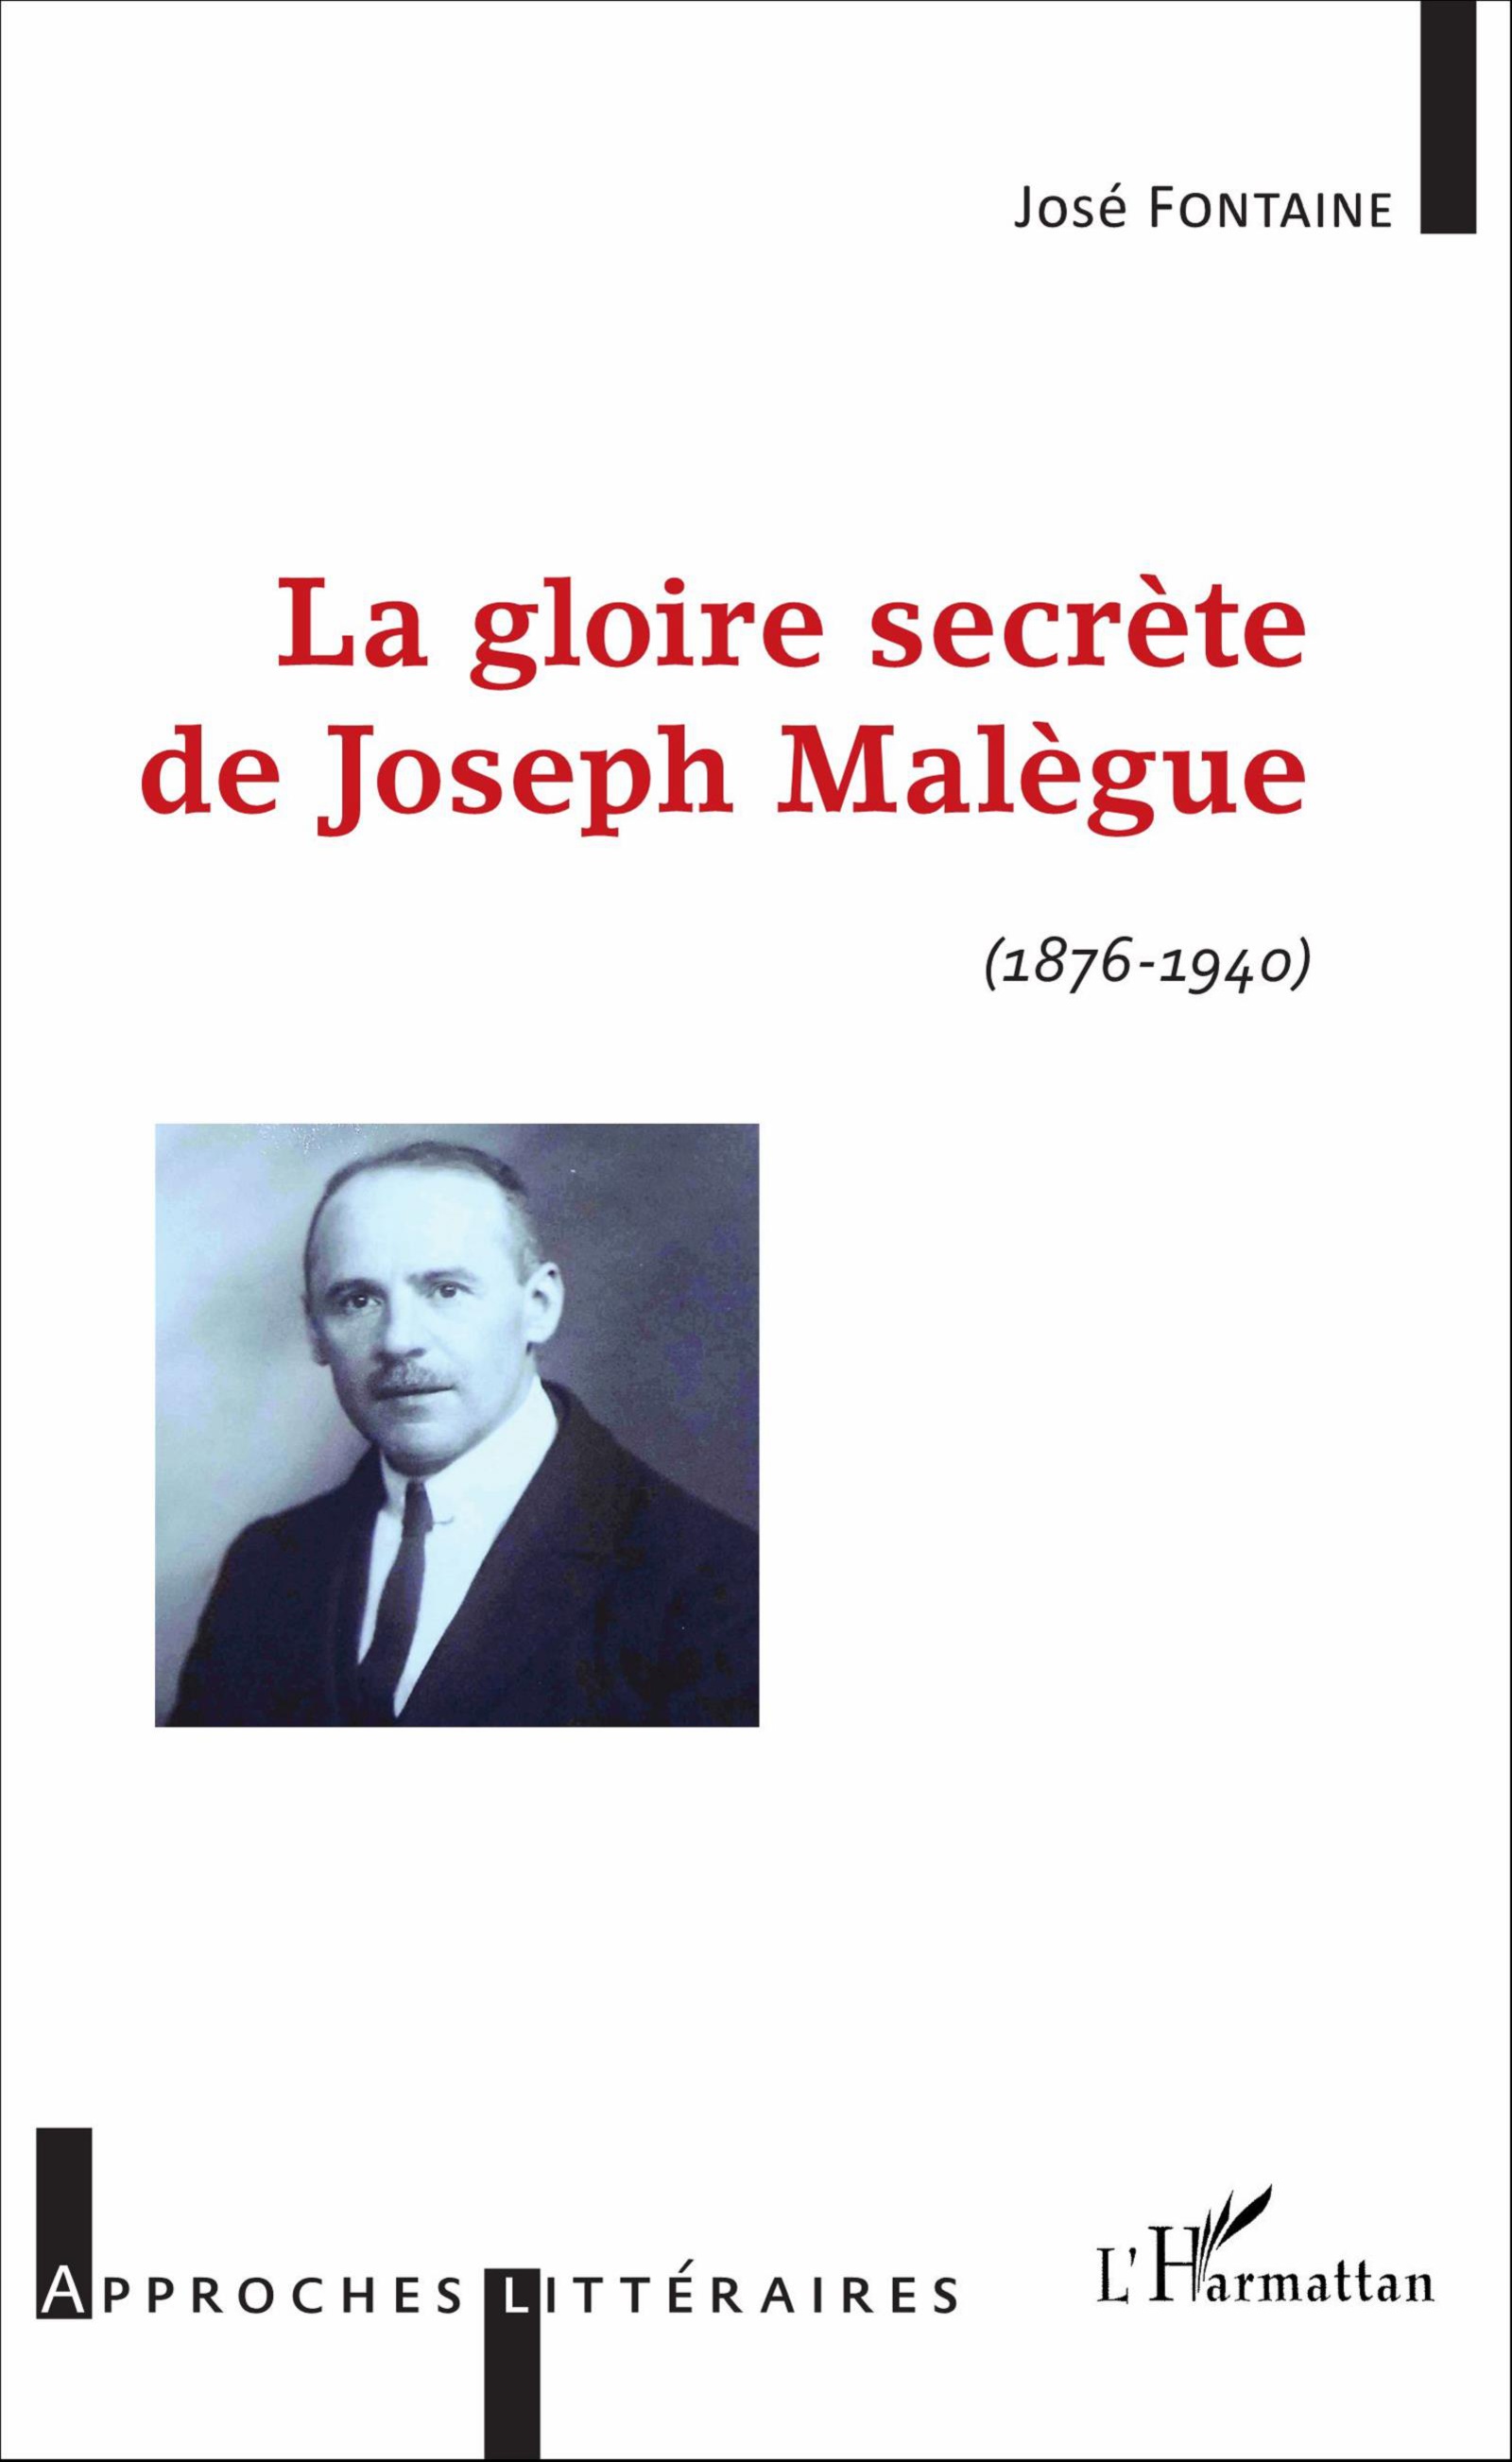 201703 75 Livres 5 GloireMalegue